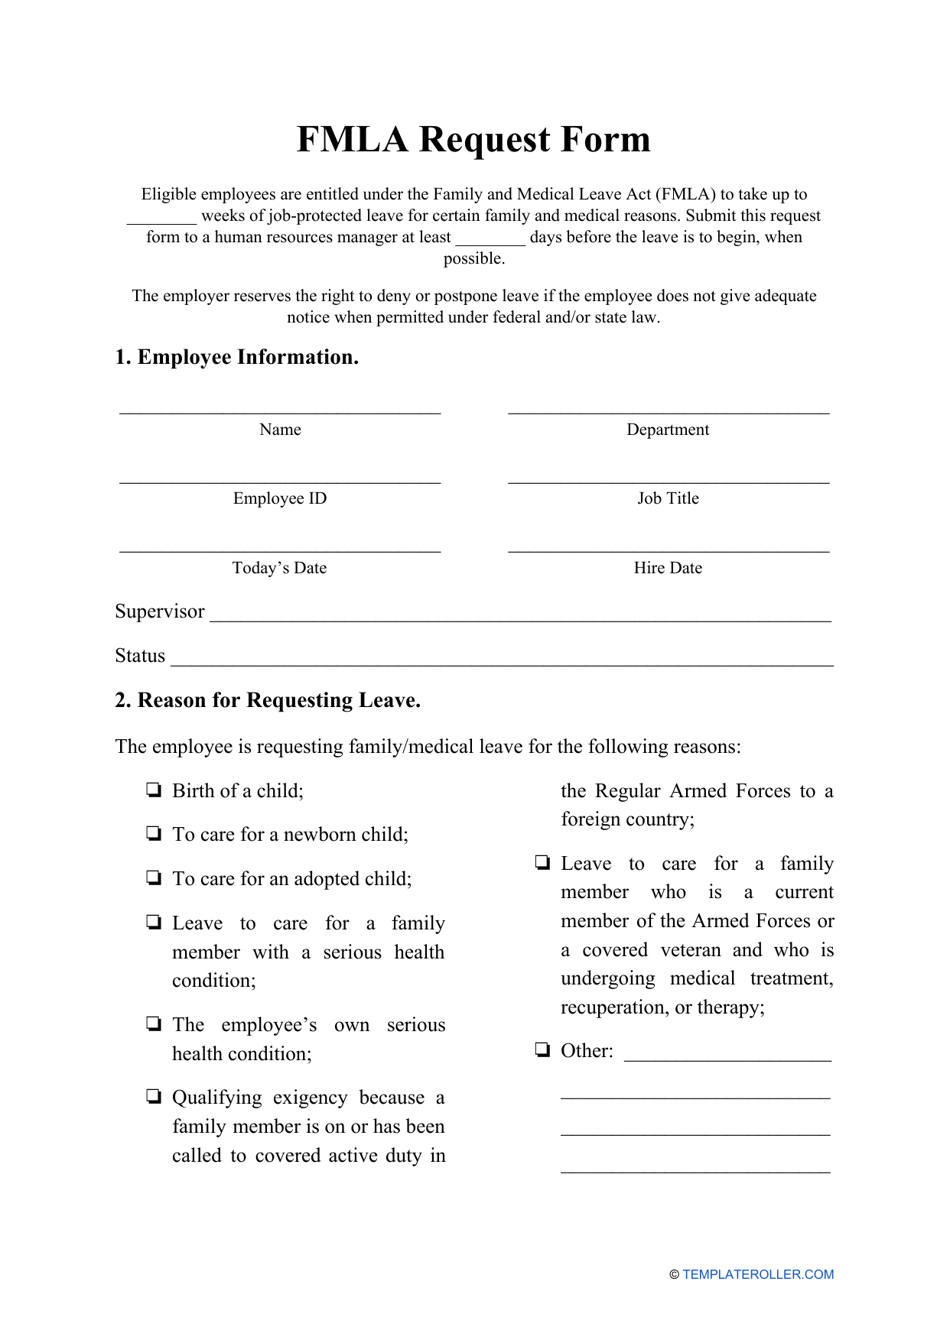 Fmla Request Form, Page 1